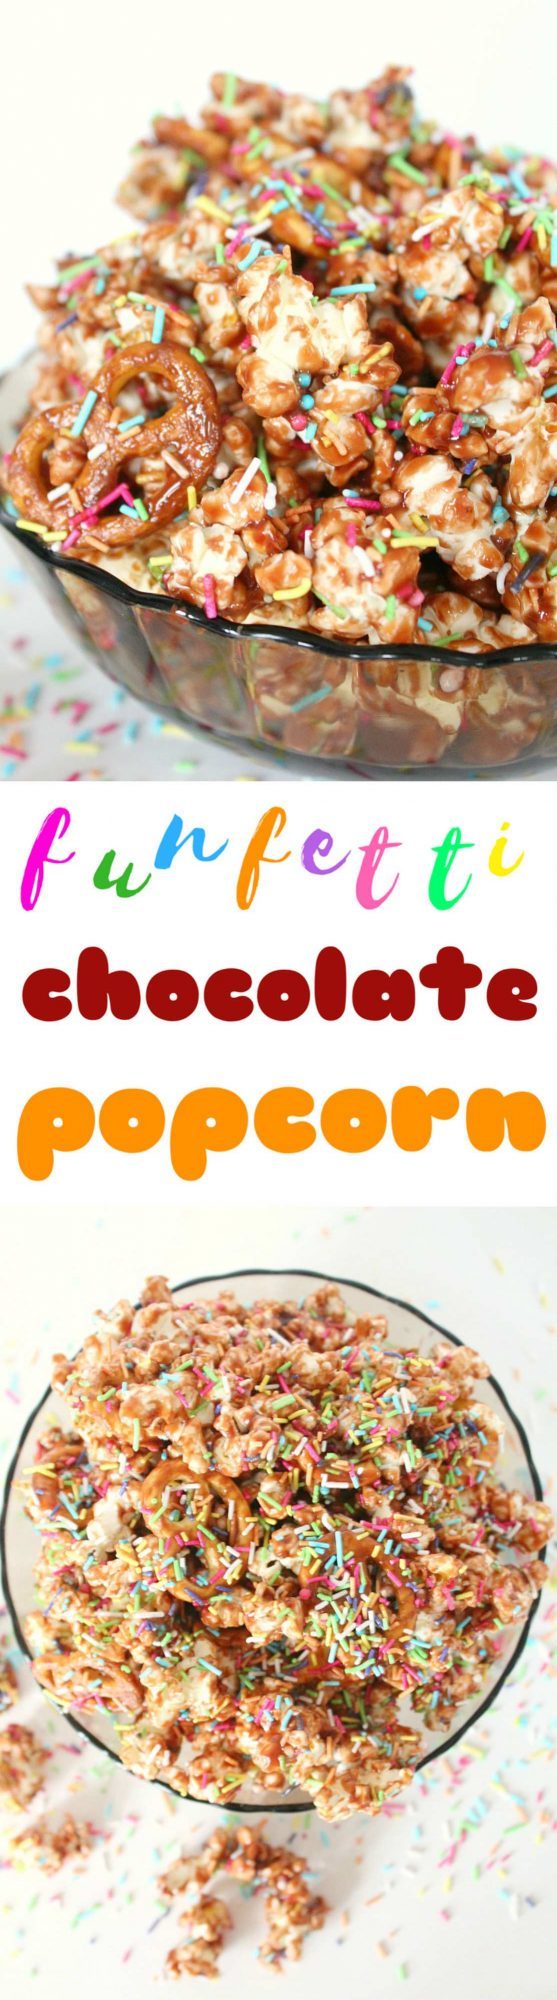 Chocolate covered popcorn recipe